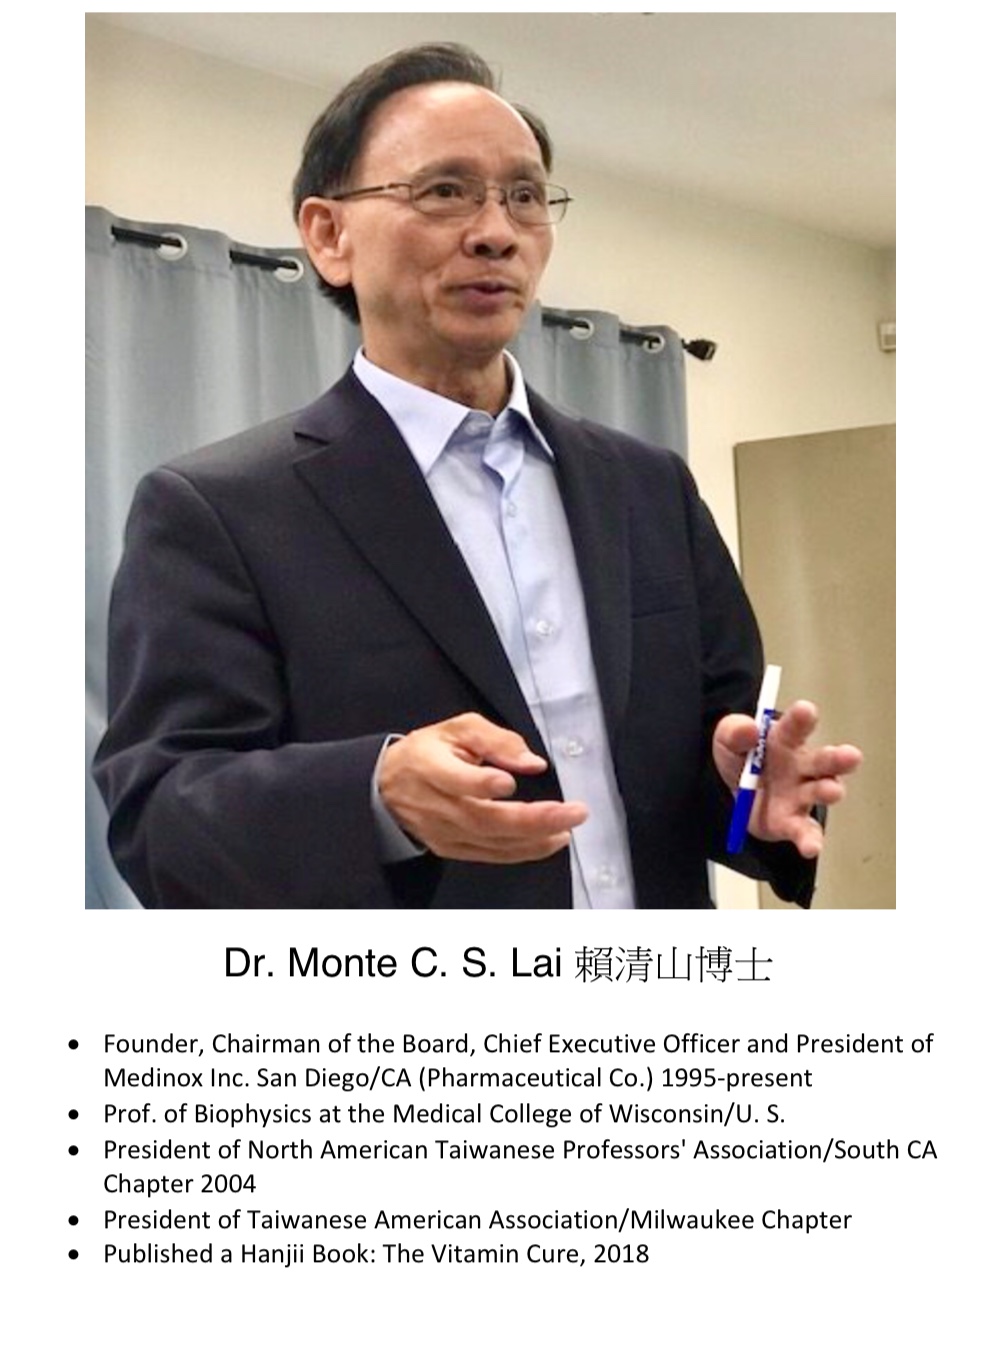 295. Dr. Monte C. S. Lai 賴清山博士